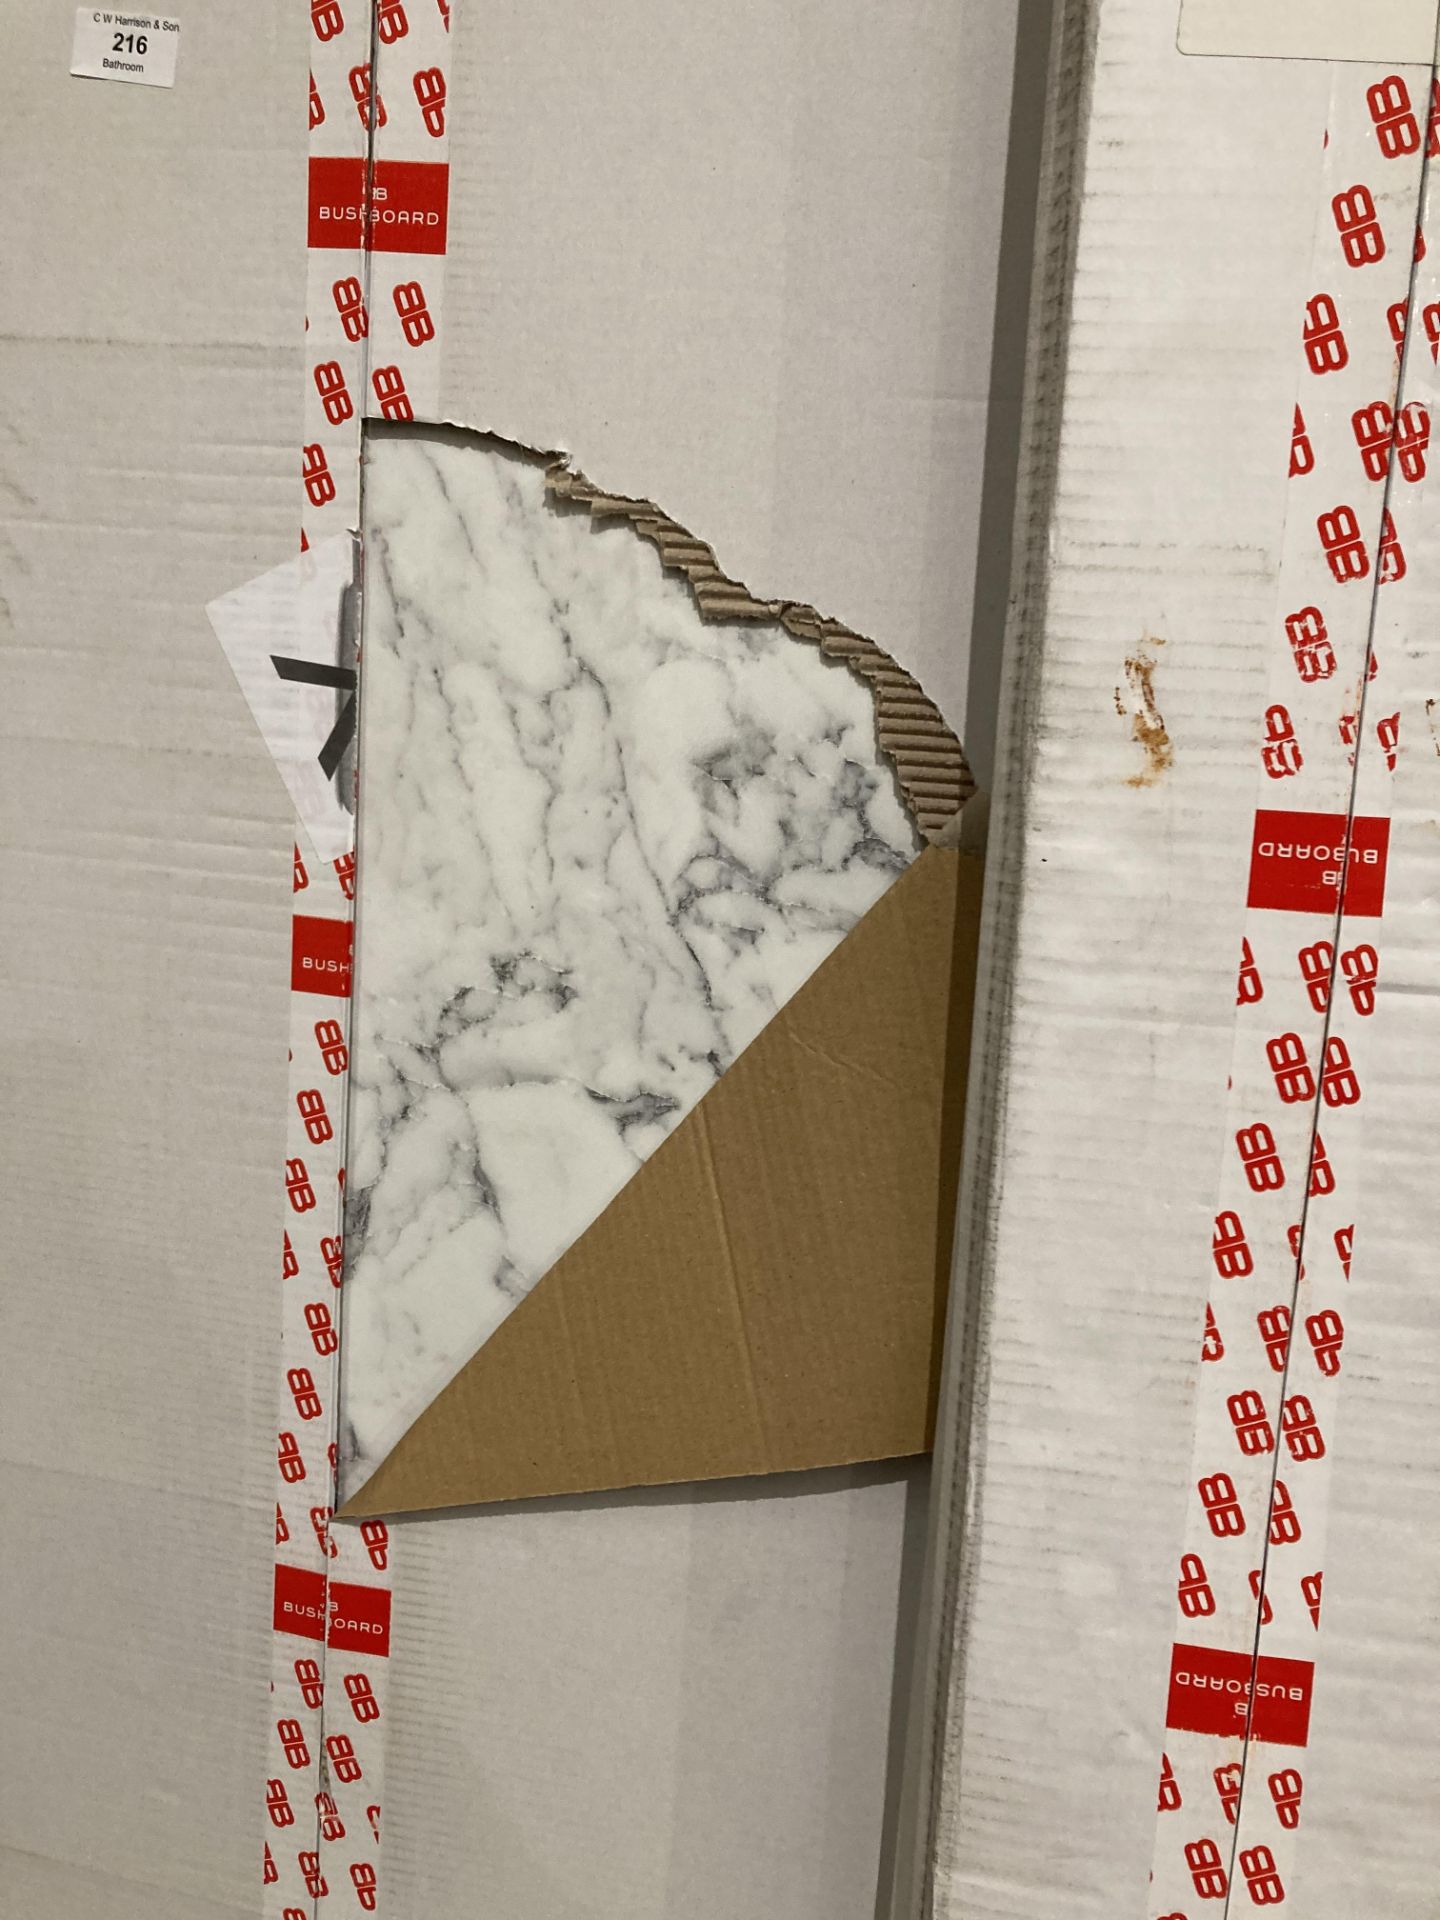 3 x Nuance Turin marble ultramatt preformed panel 2420mmx 160mm x 11mm and 1 2420mm x 580mm x11mm - Image 3 of 3